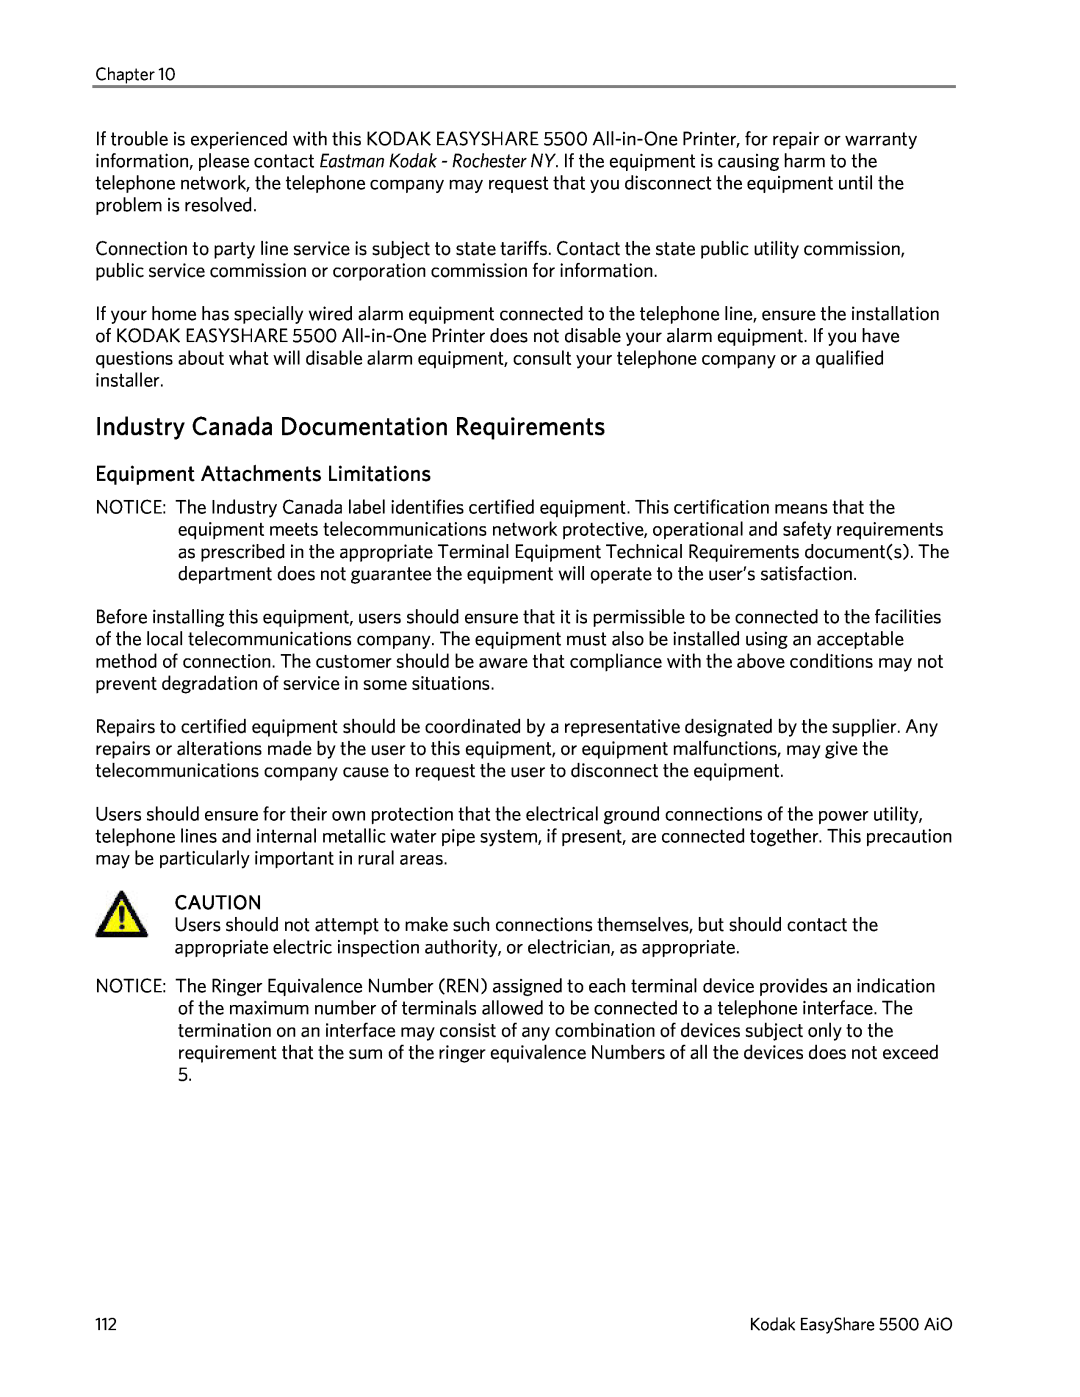 Kodak 5500 manual Industry Canada Documentation Requirements, Equipment Attachments Limitations 